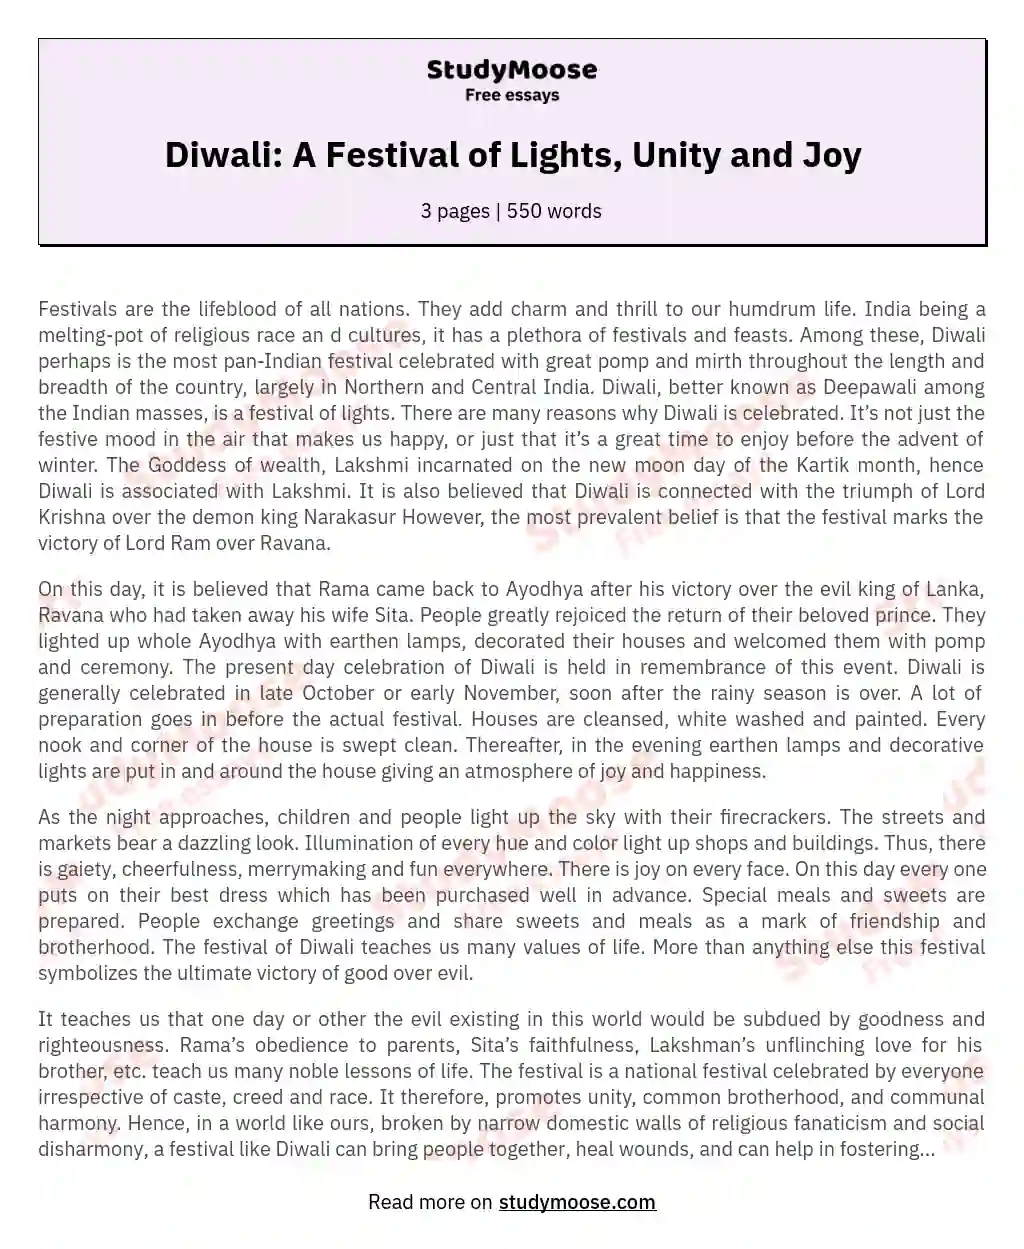 Diwali: A Festival of Lights, Unity and Joy essay